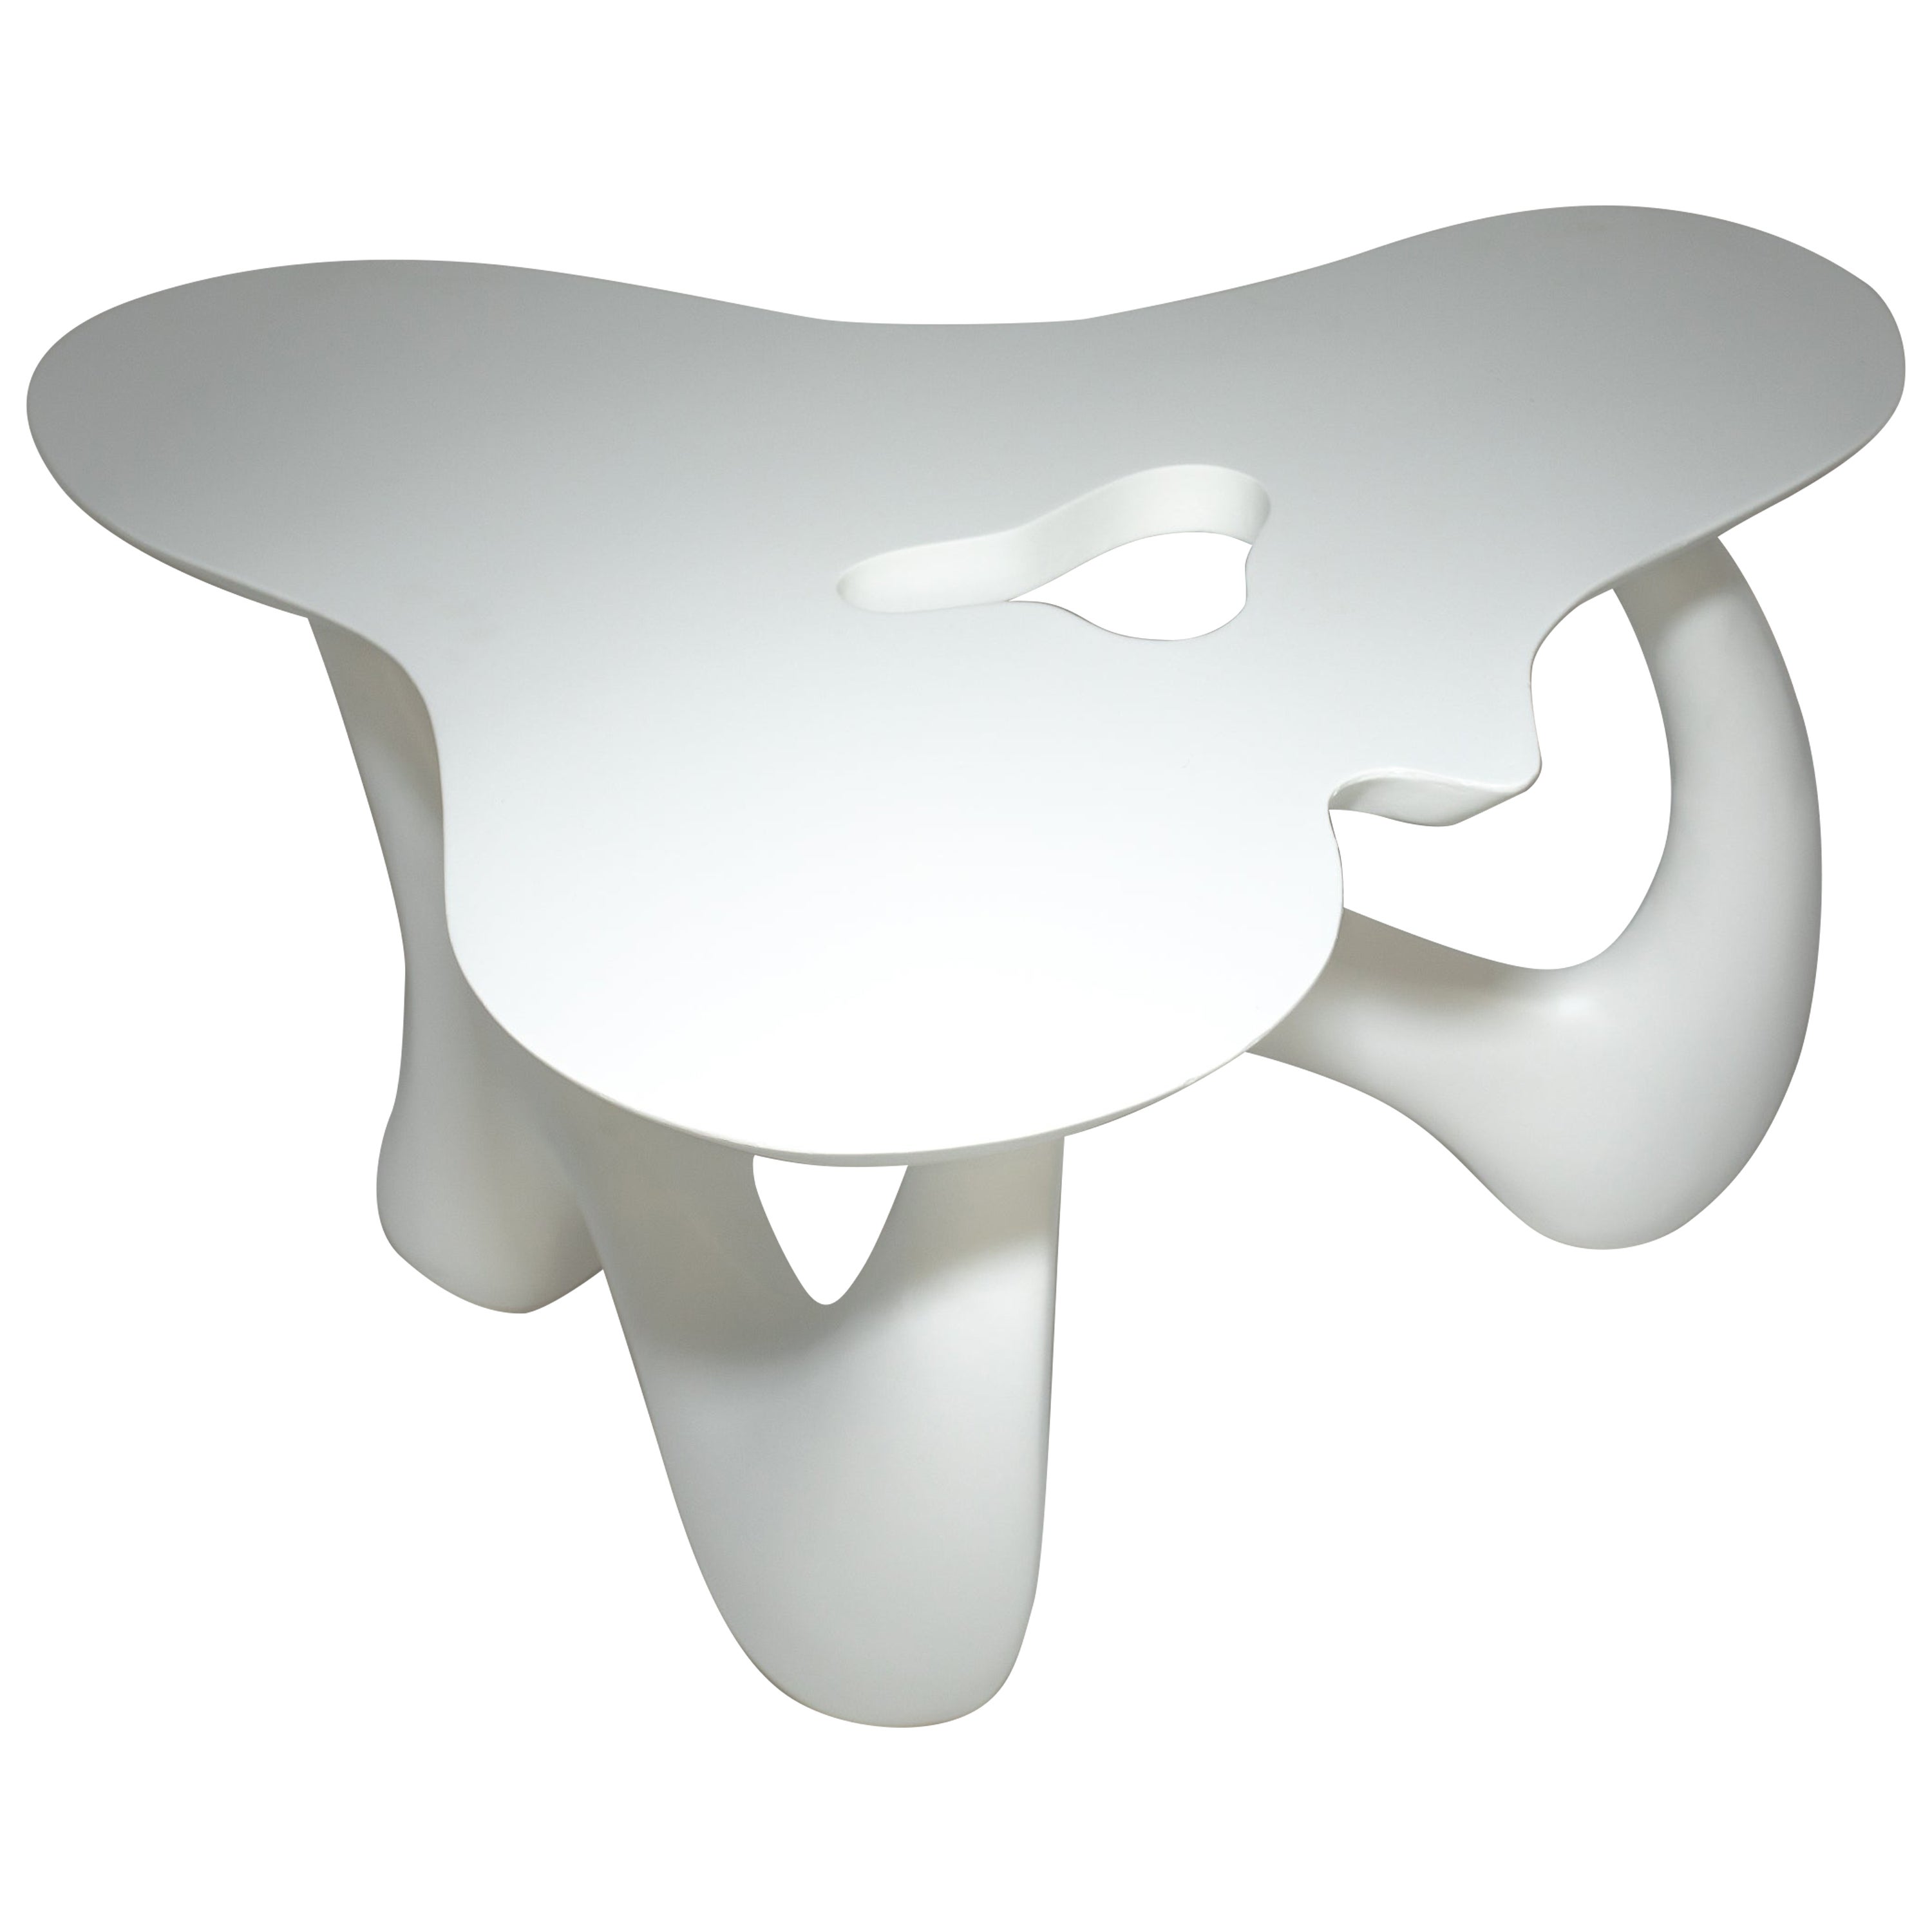 Table biomorphique laquée blanche en vente